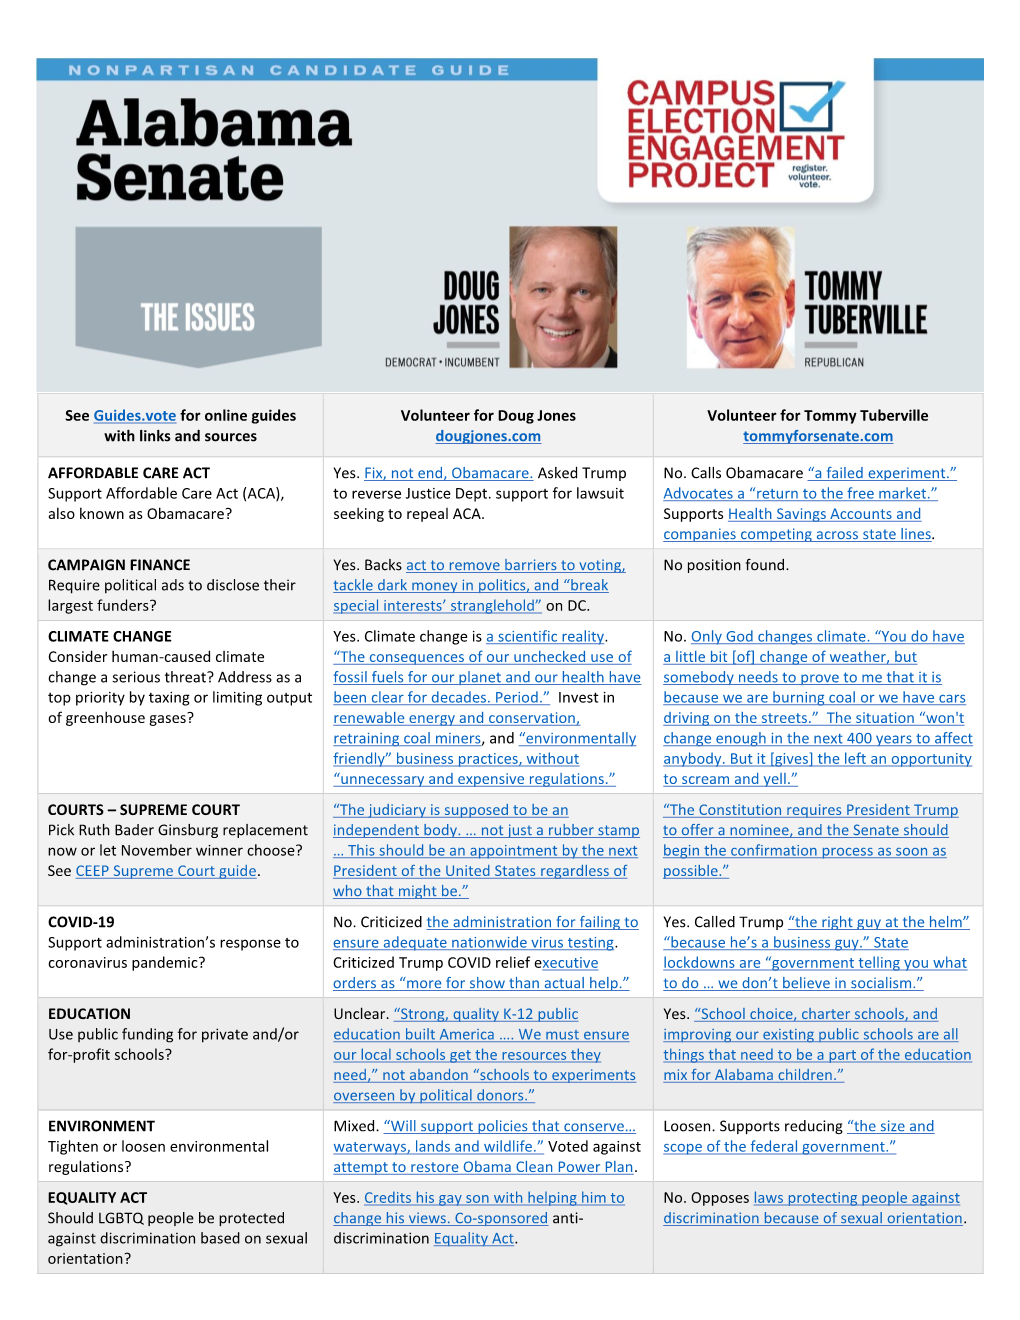 Alabama Senate Guide